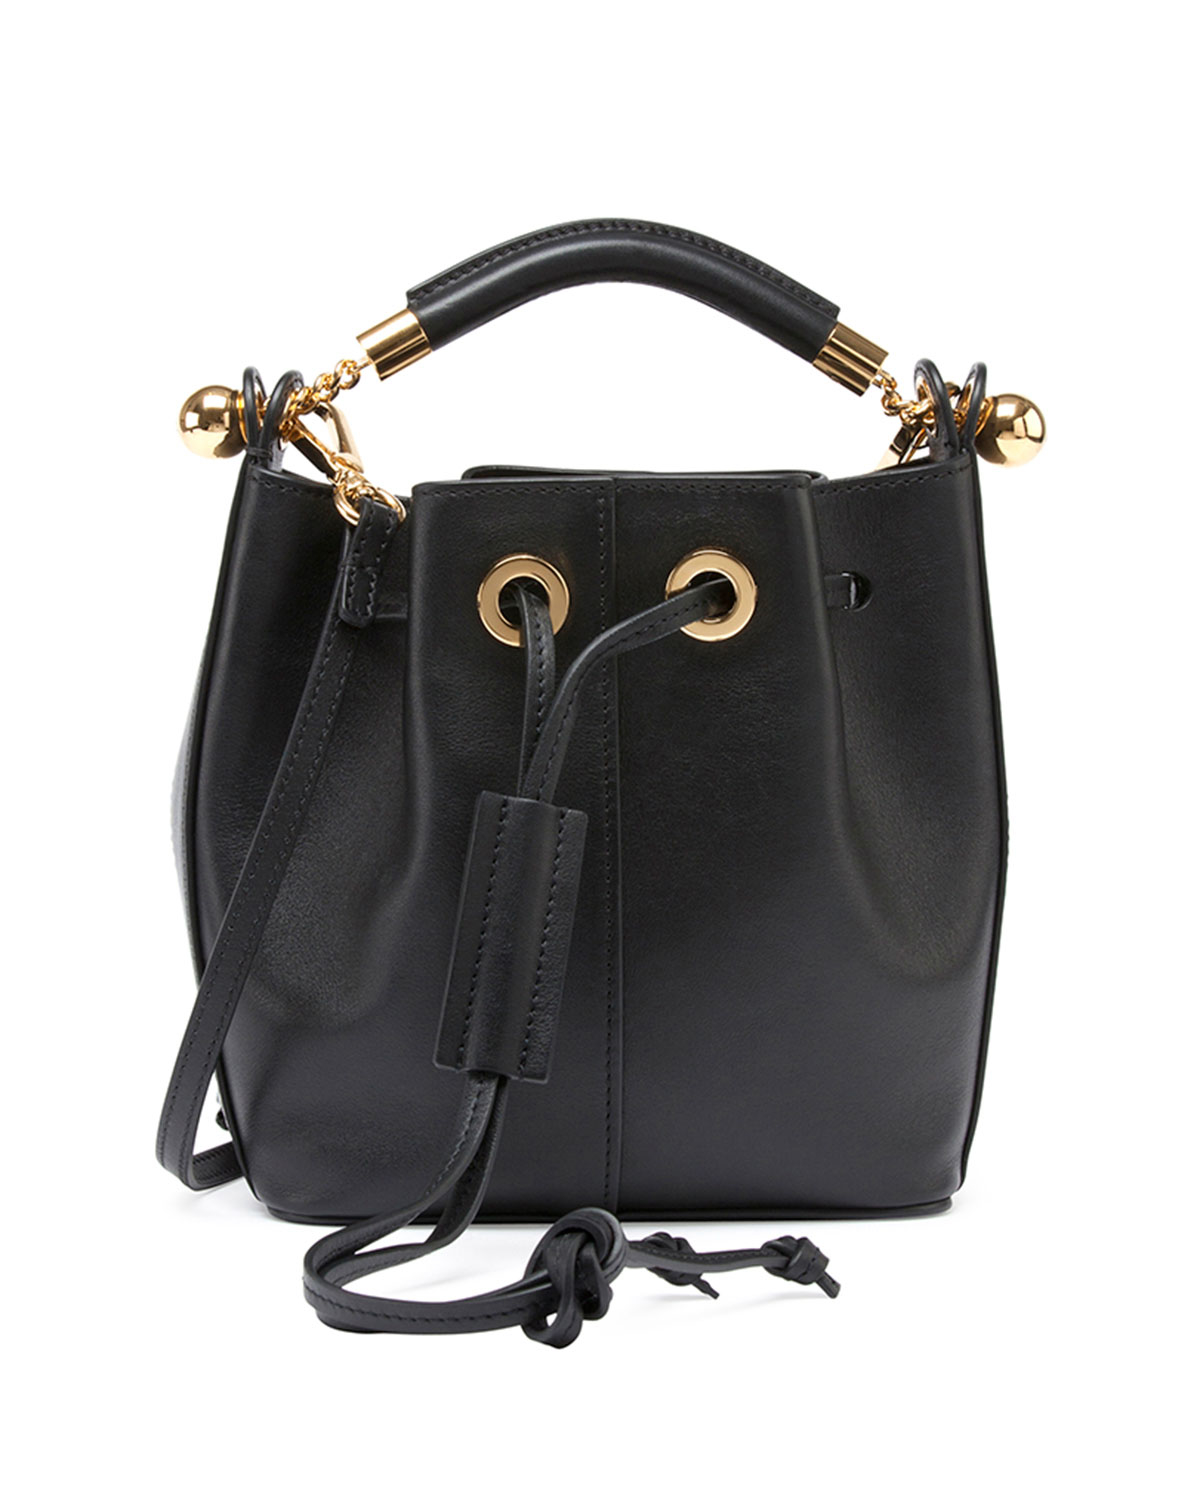 Chloé Gala Small Leather Bucket Bag in Black | Lyst